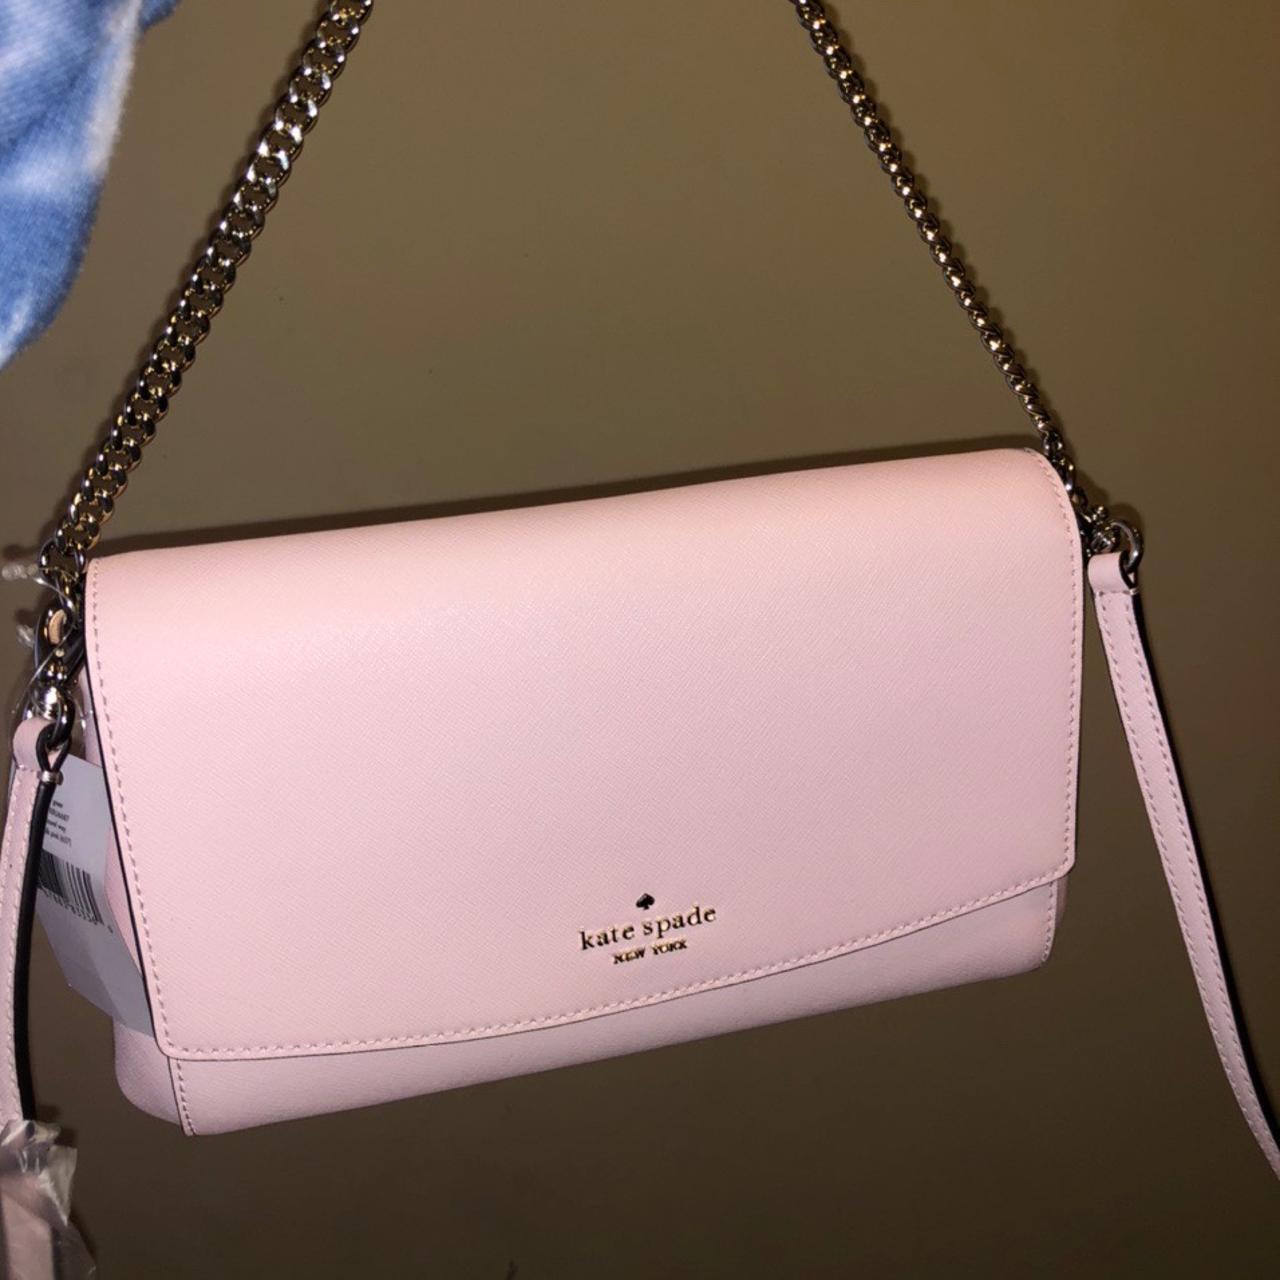 kate spade maroon/pink purse and matching wallet, no... - Depop